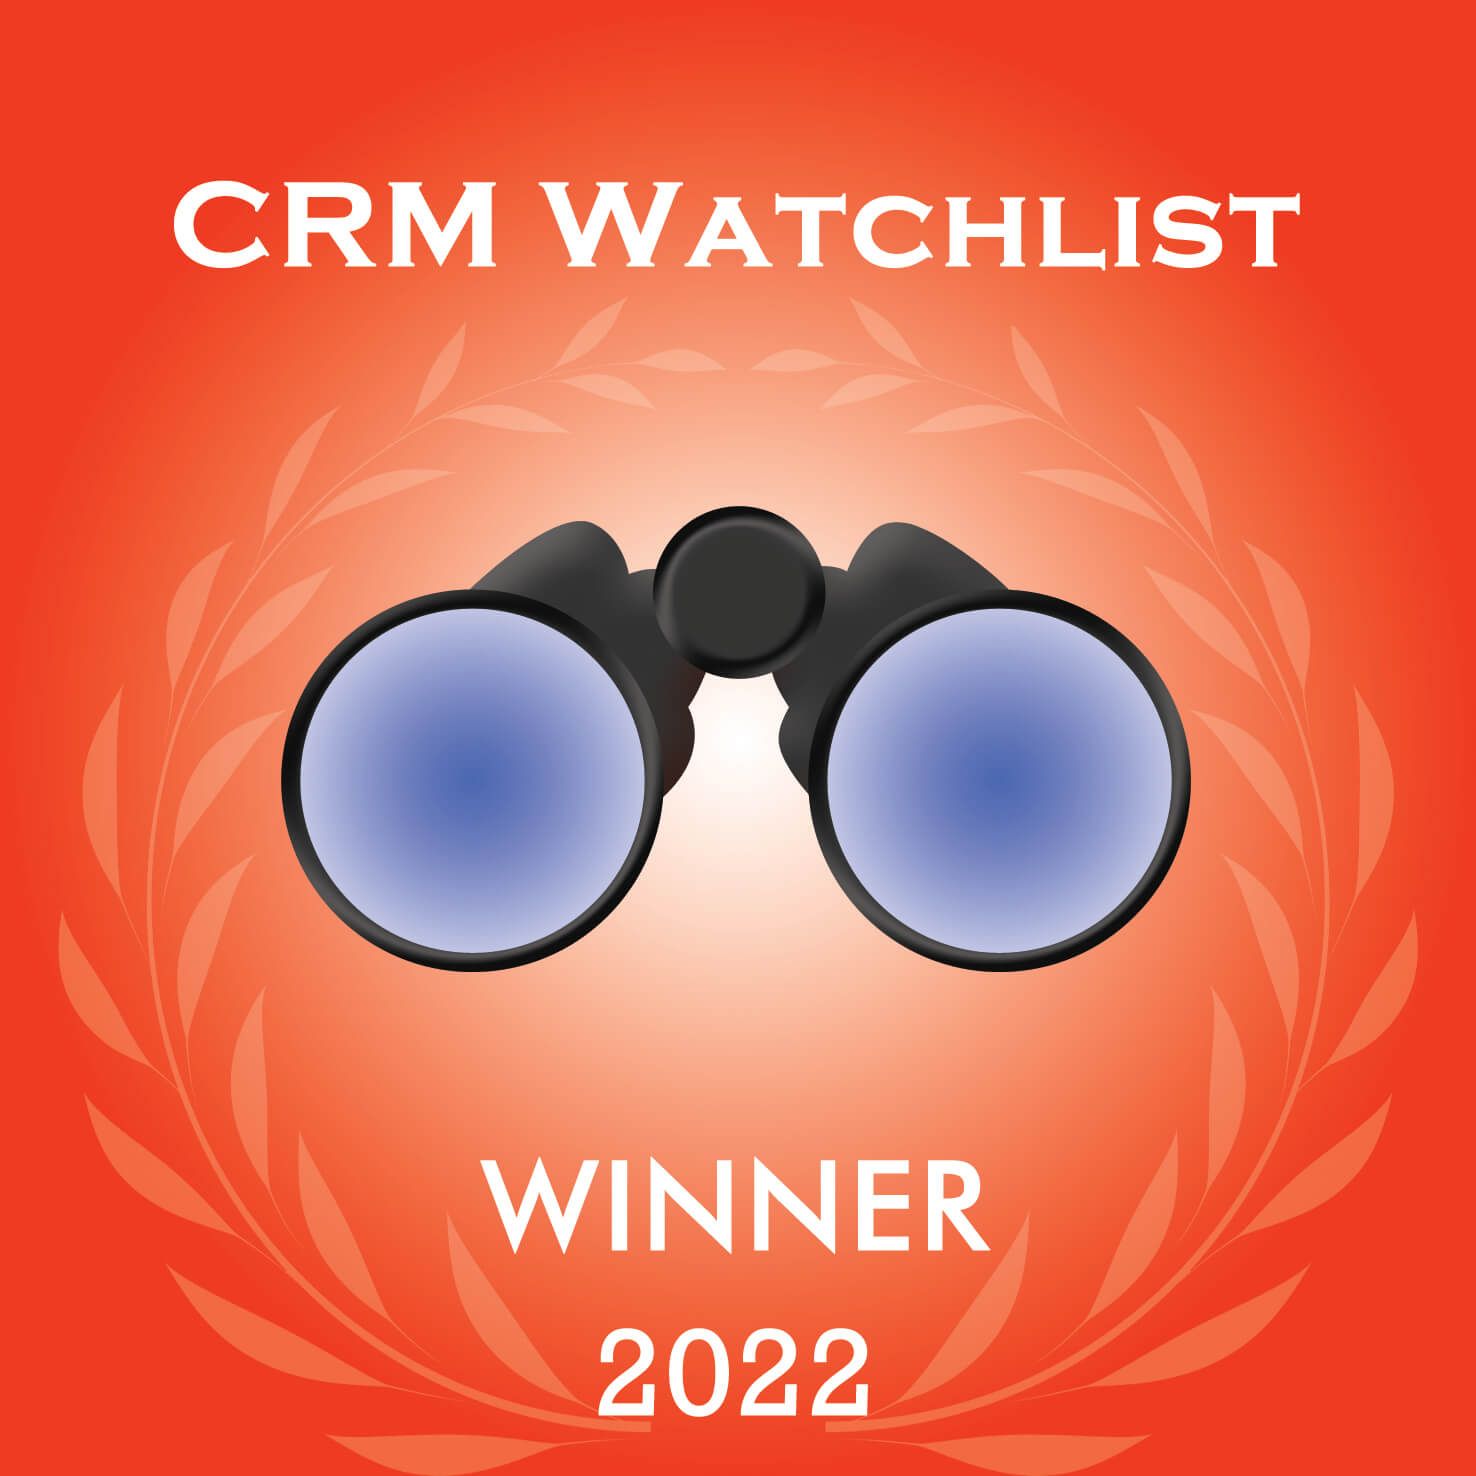 CRM Watchlist Winner 2022 award badge